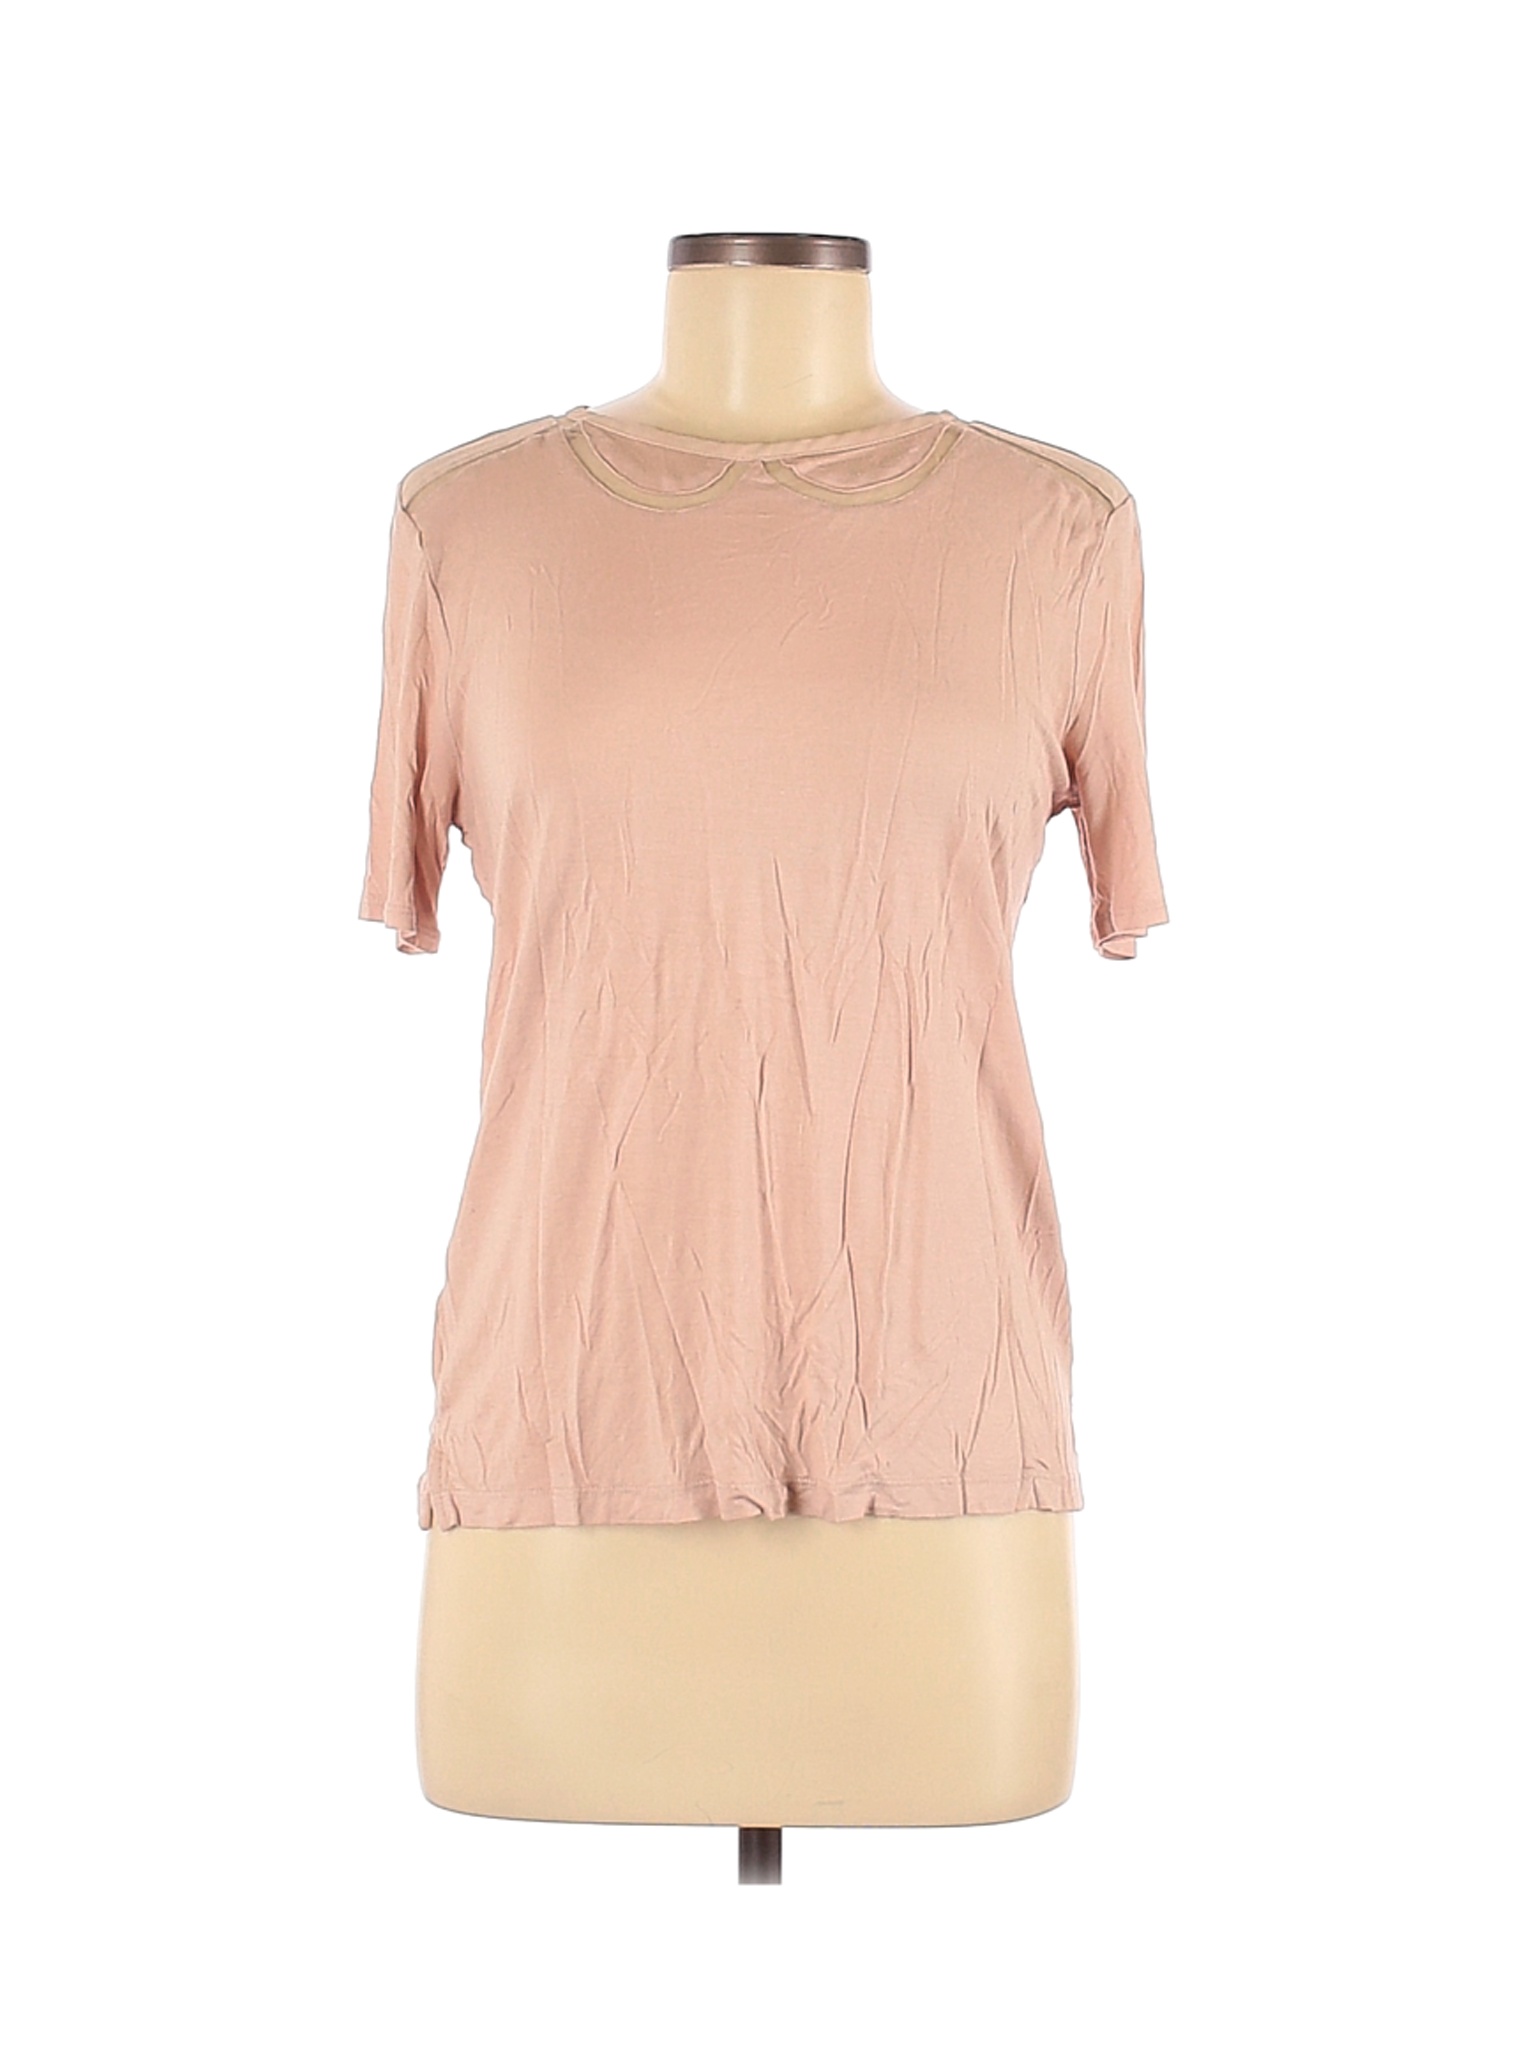 Ann Taylor LOFT Women Brown Short Sleeve Top M | eBay